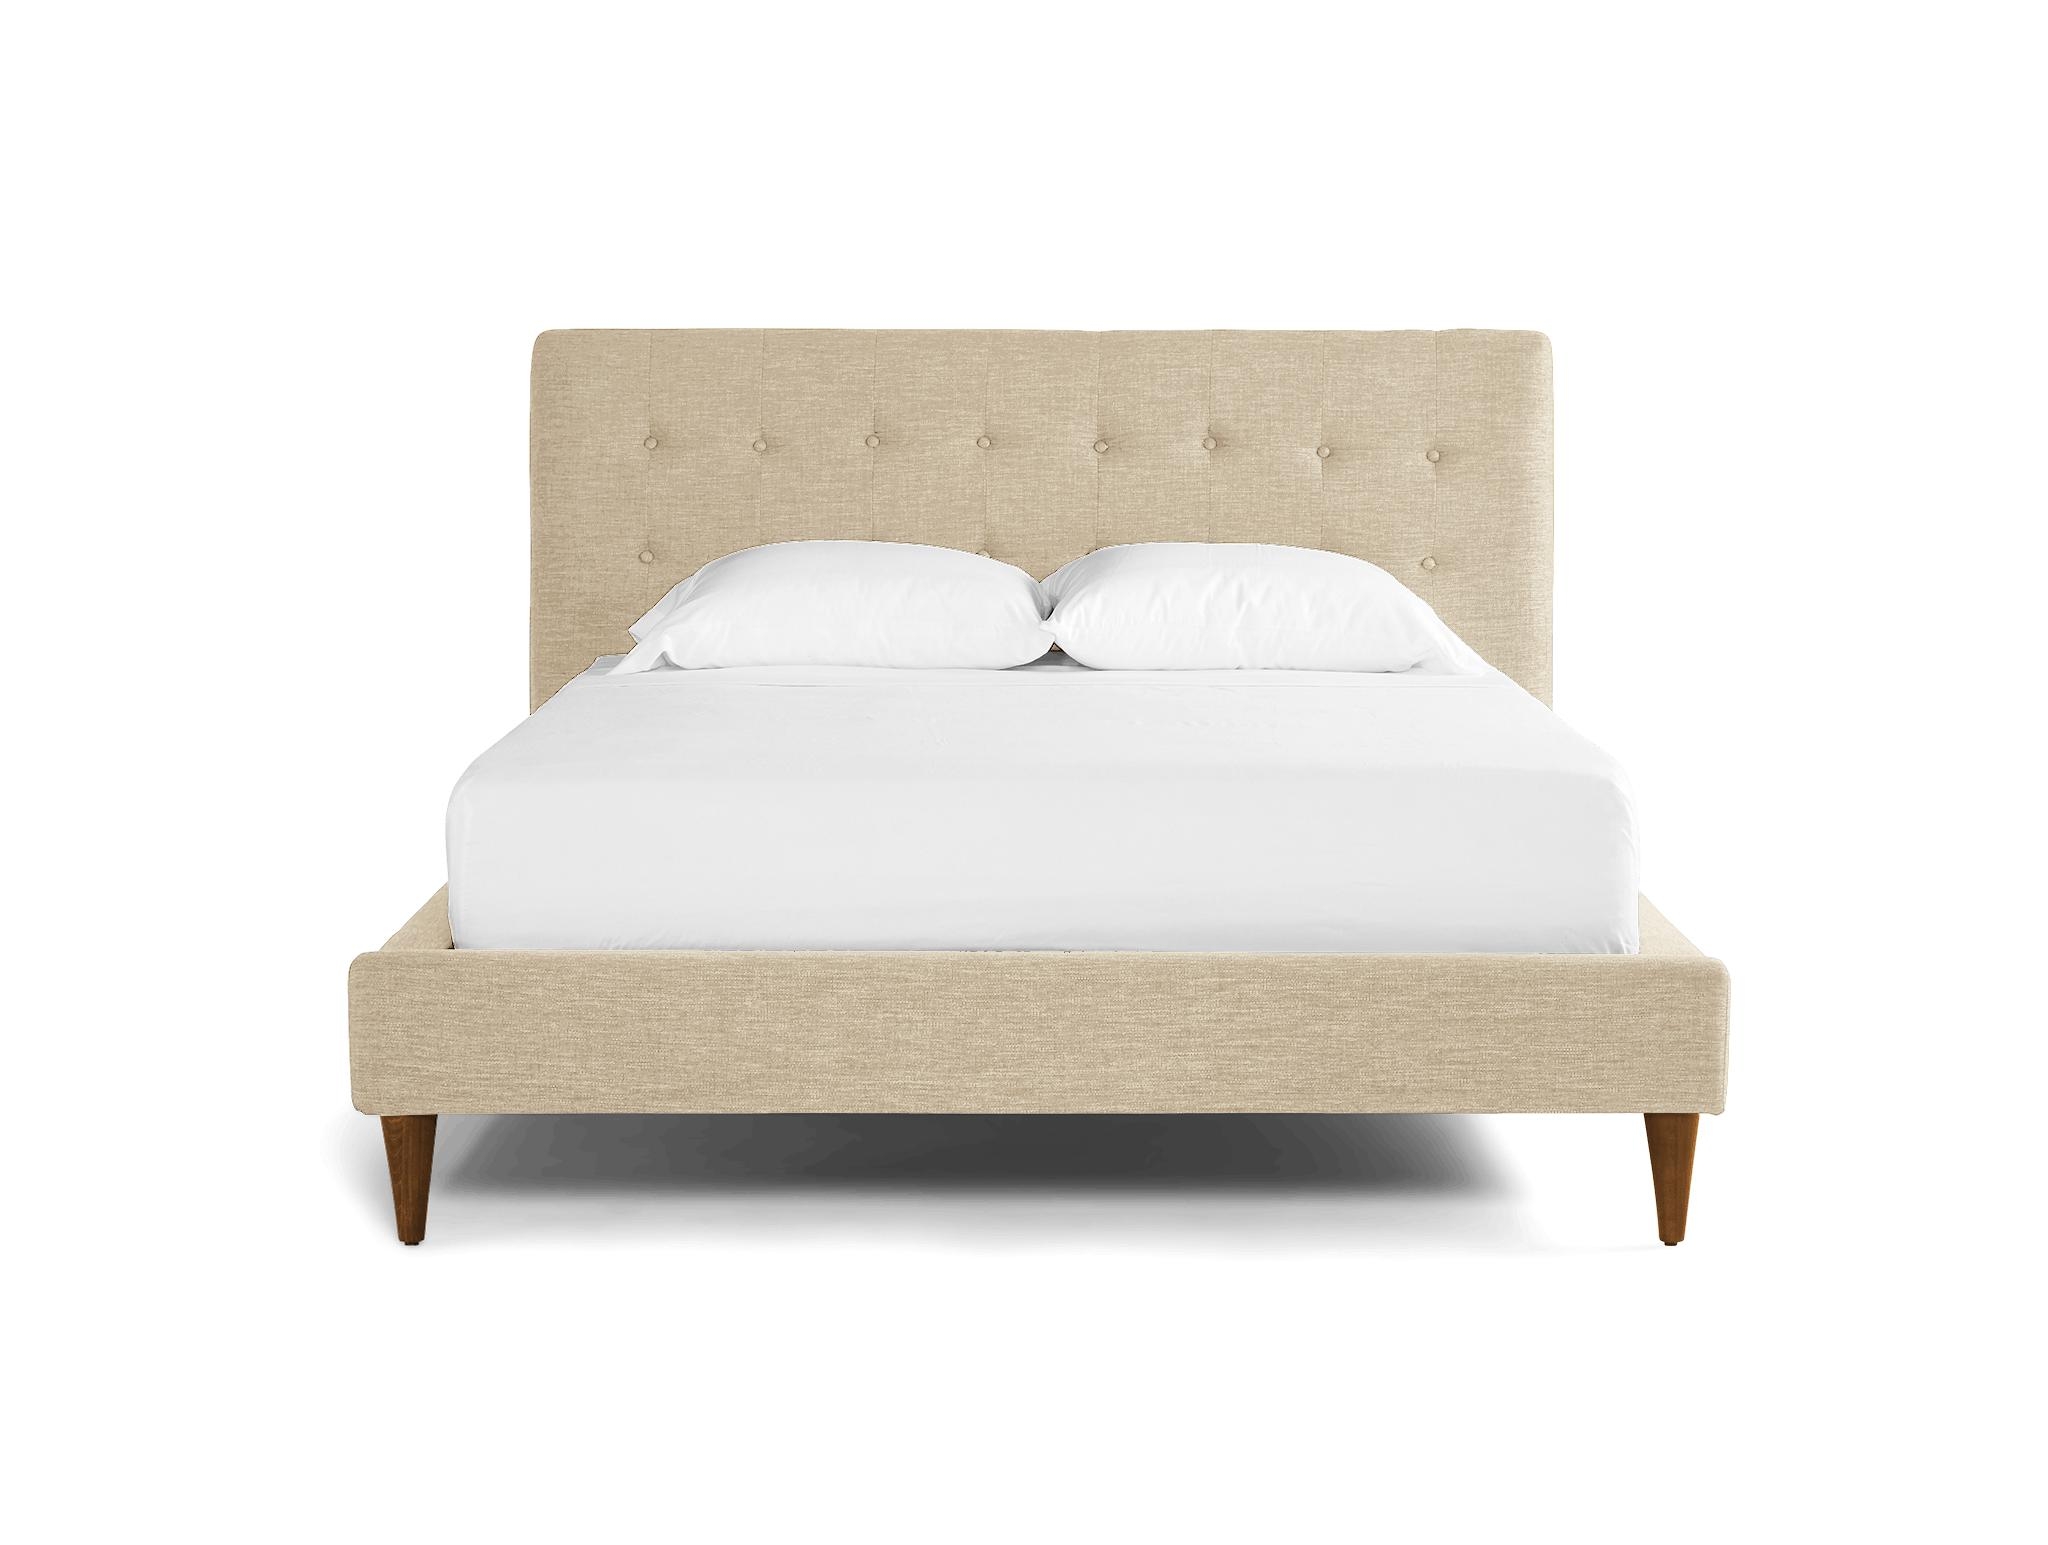 White Eliot Mid Century Modern Bed - Nico Oyster - Mocha - Cal King - Image 0